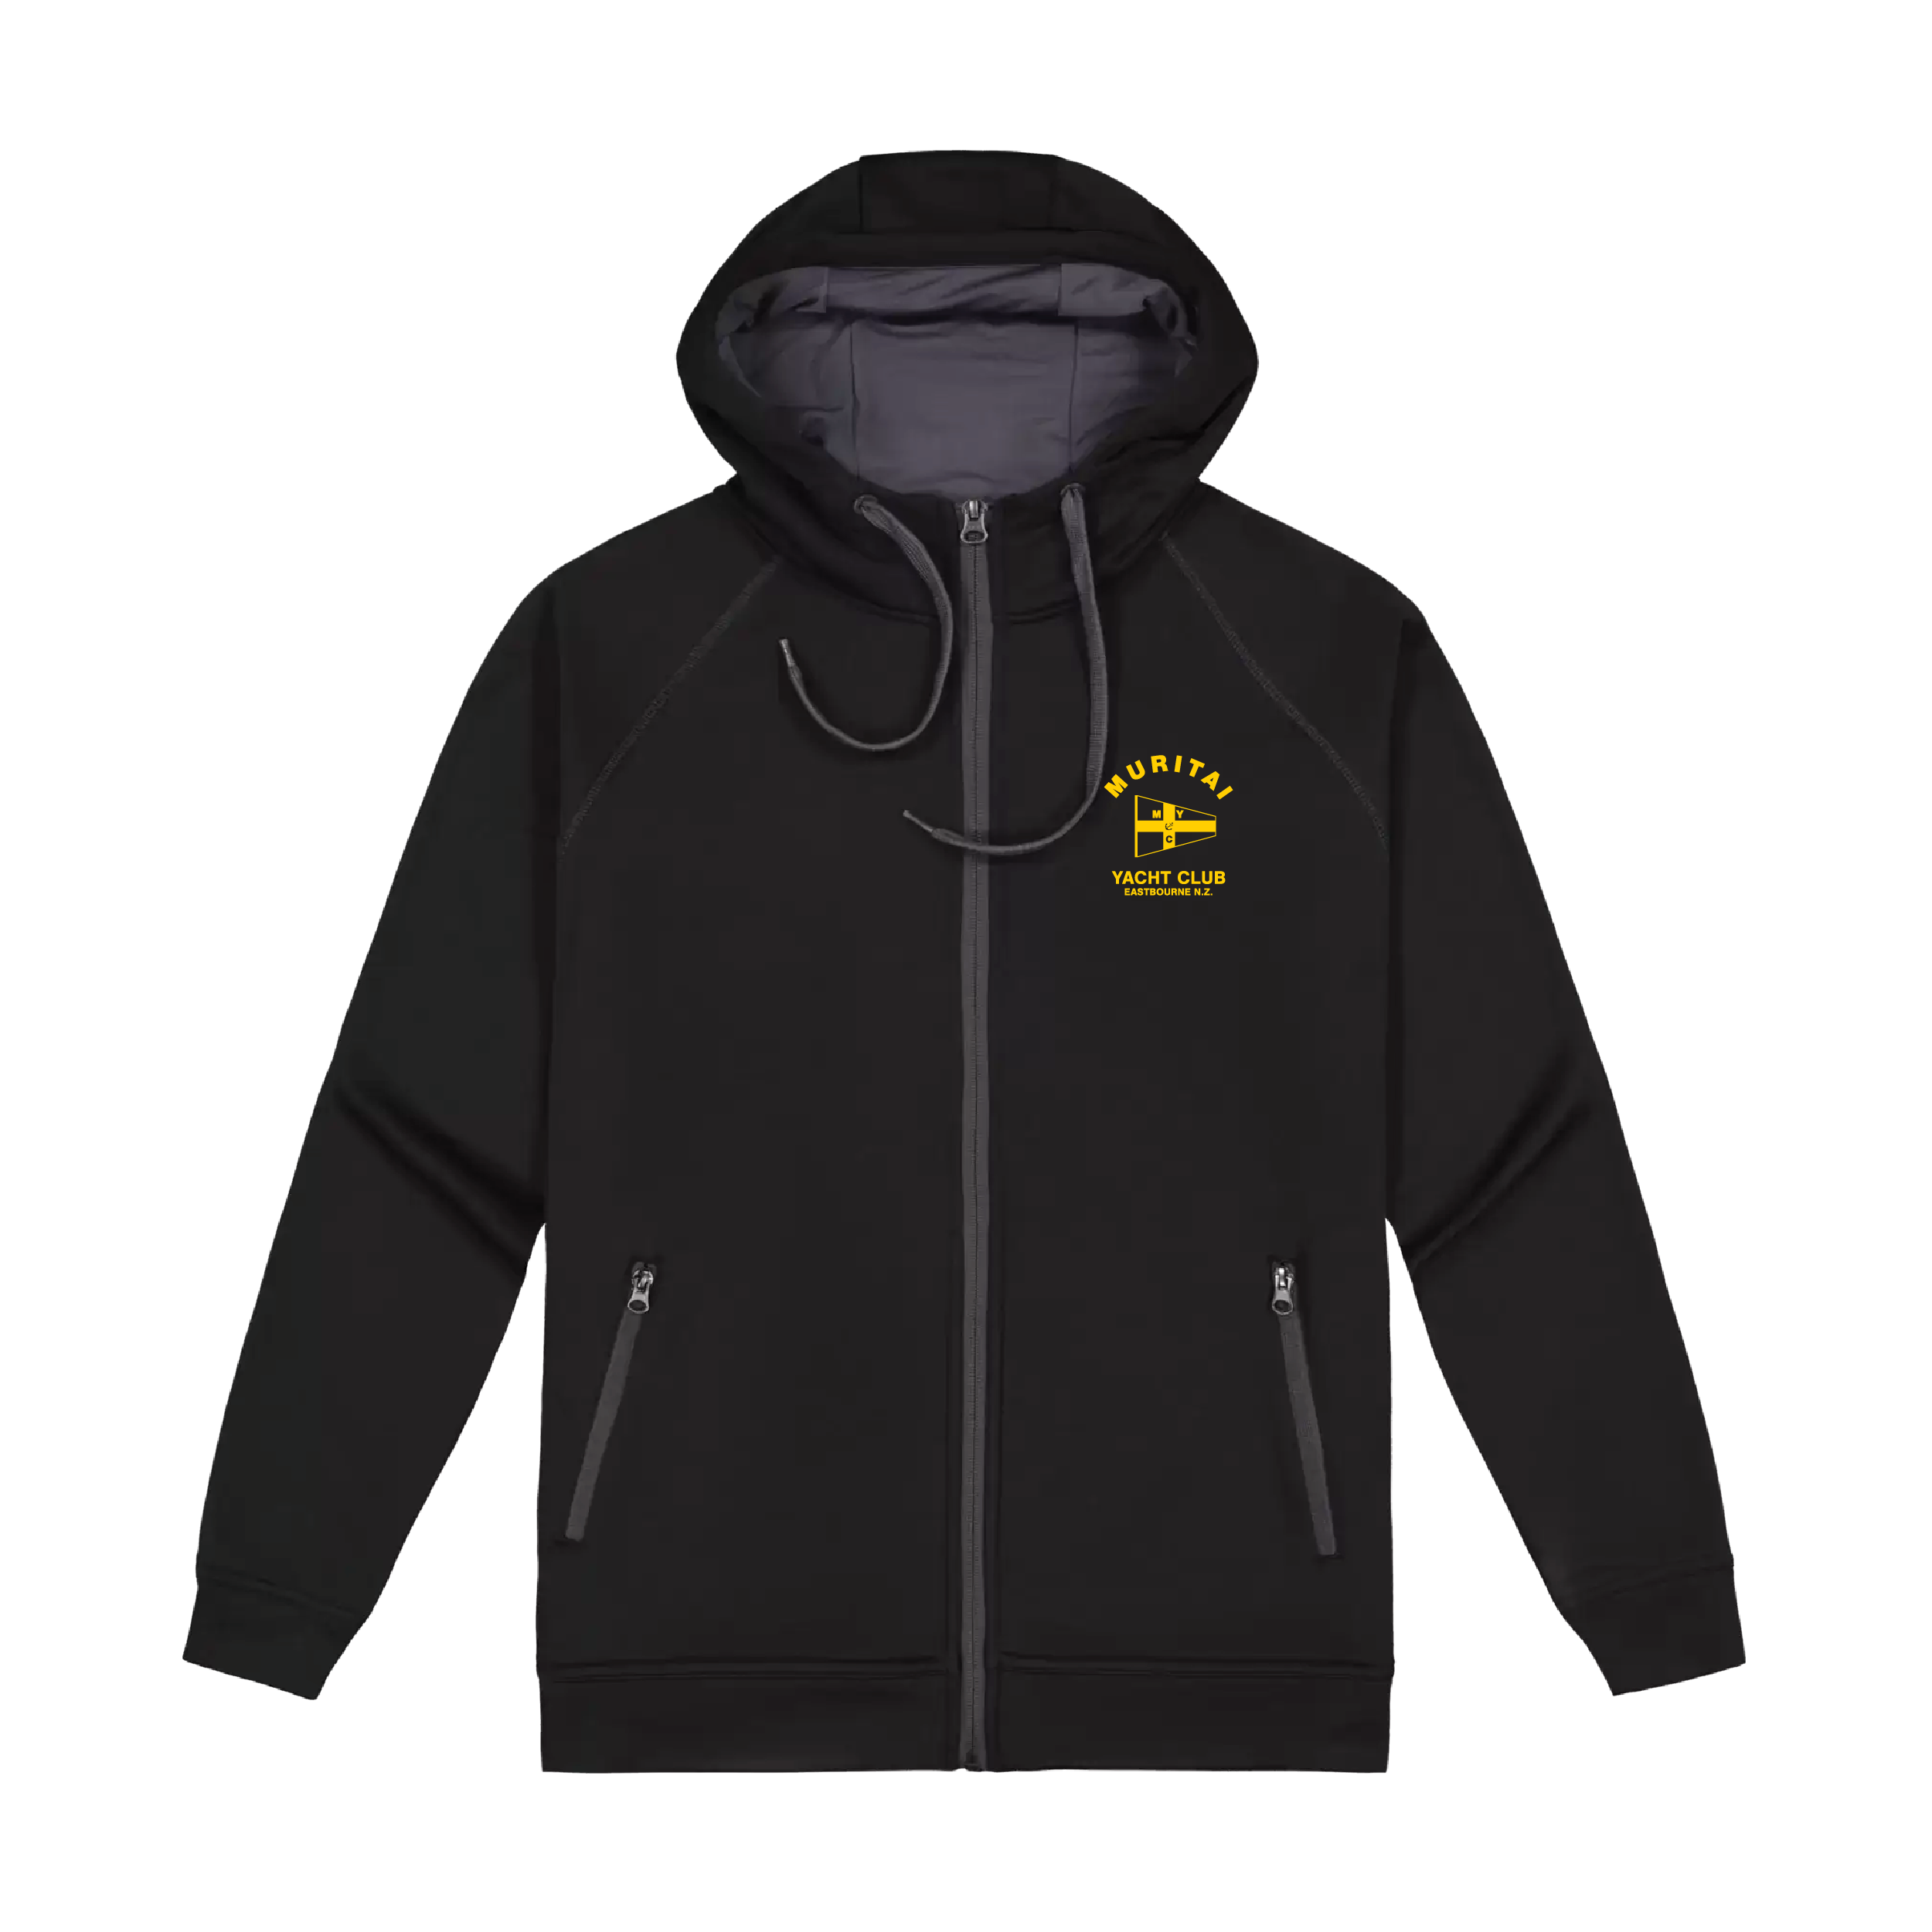 MYC Zip Hoodie - Pre Order - Custom Clothing | T Shirt Printing | Embroidery | Screen Printing | Print Room NZ